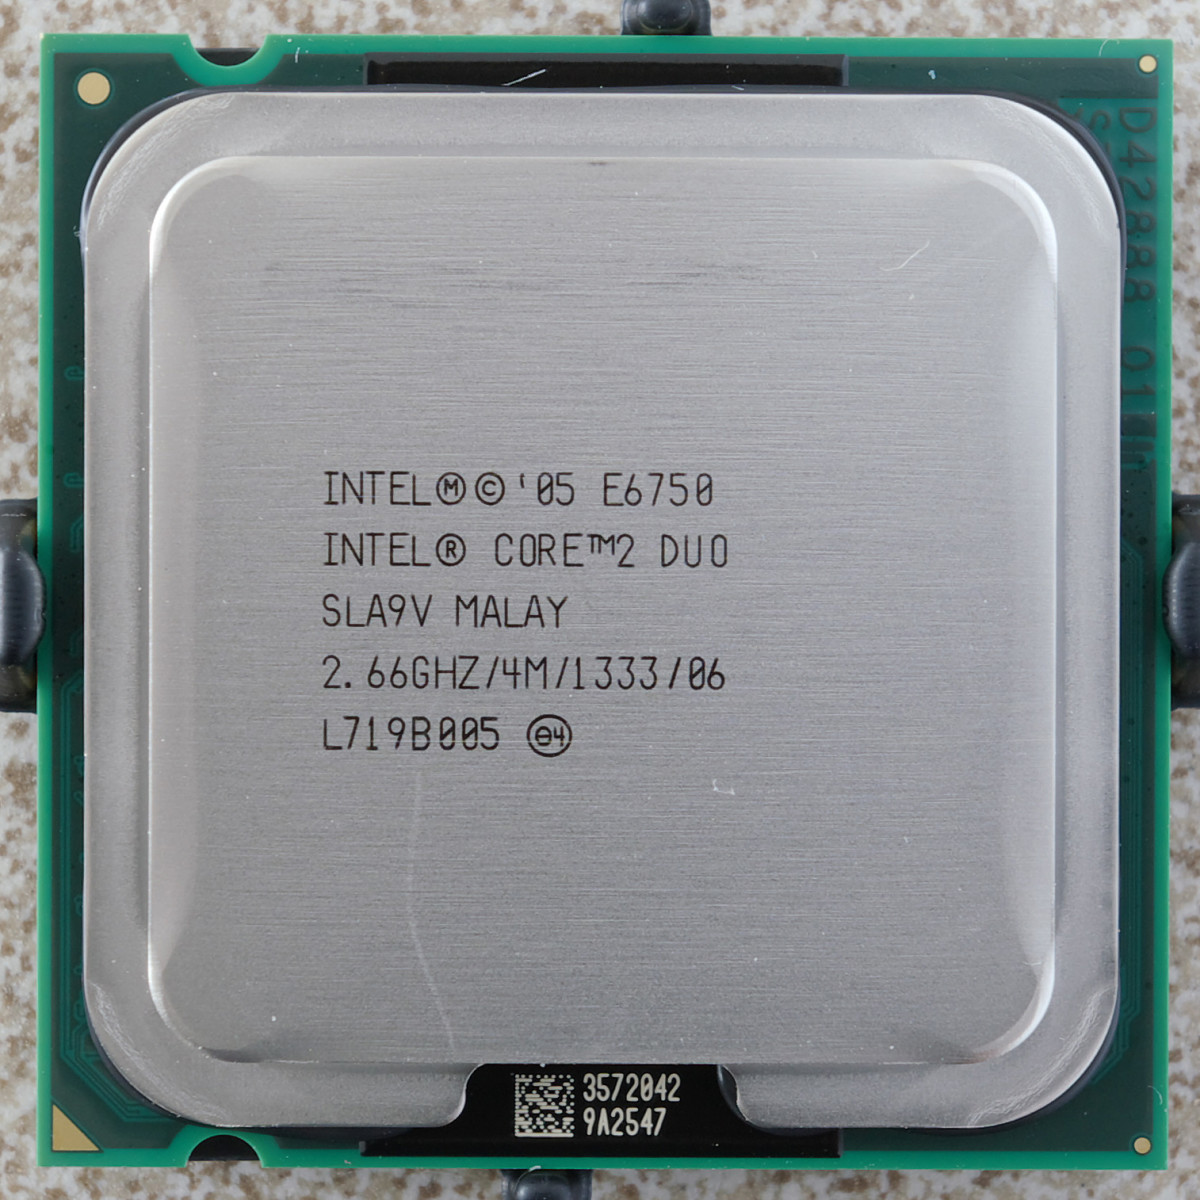 An Intel Core 2 Duo Processor